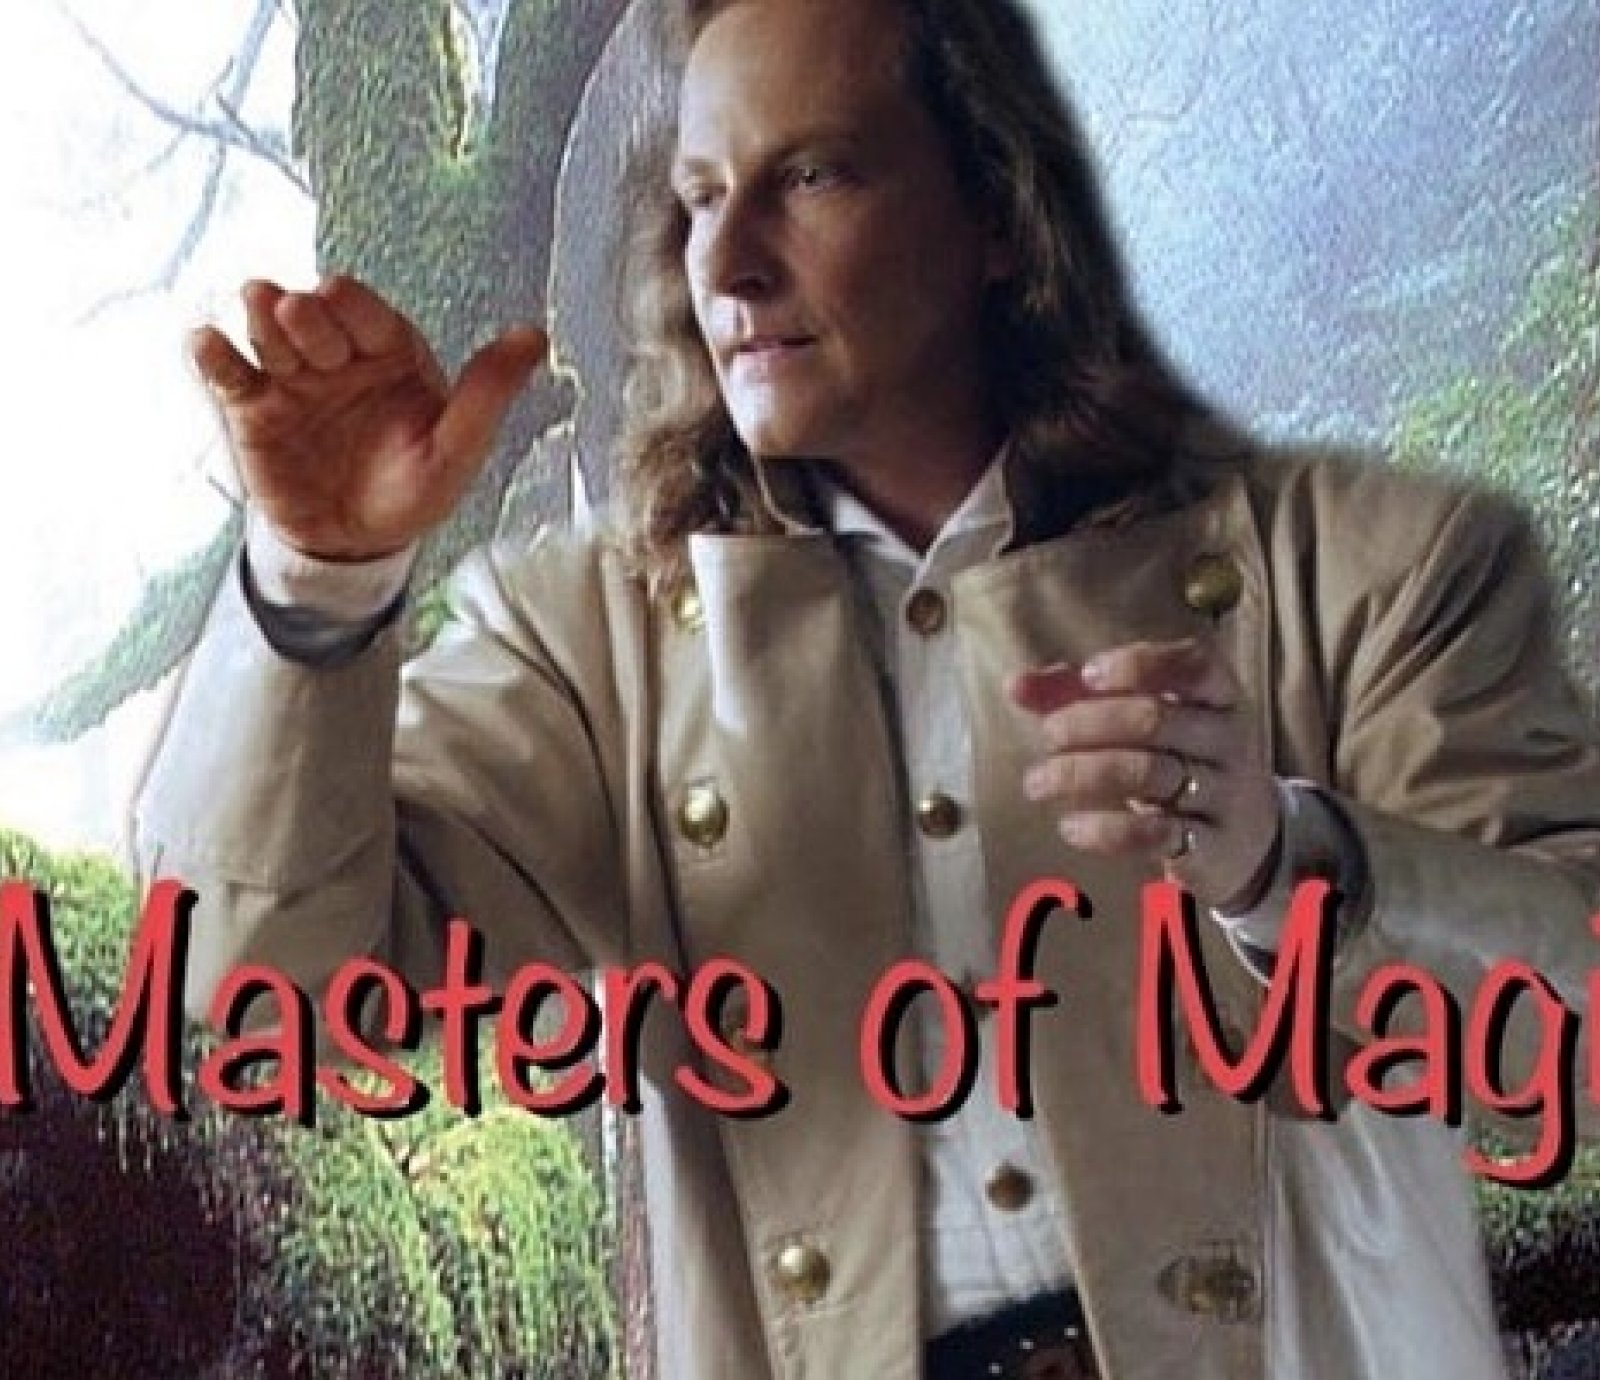 Masters of Magic by Las Vegas Magic Theater